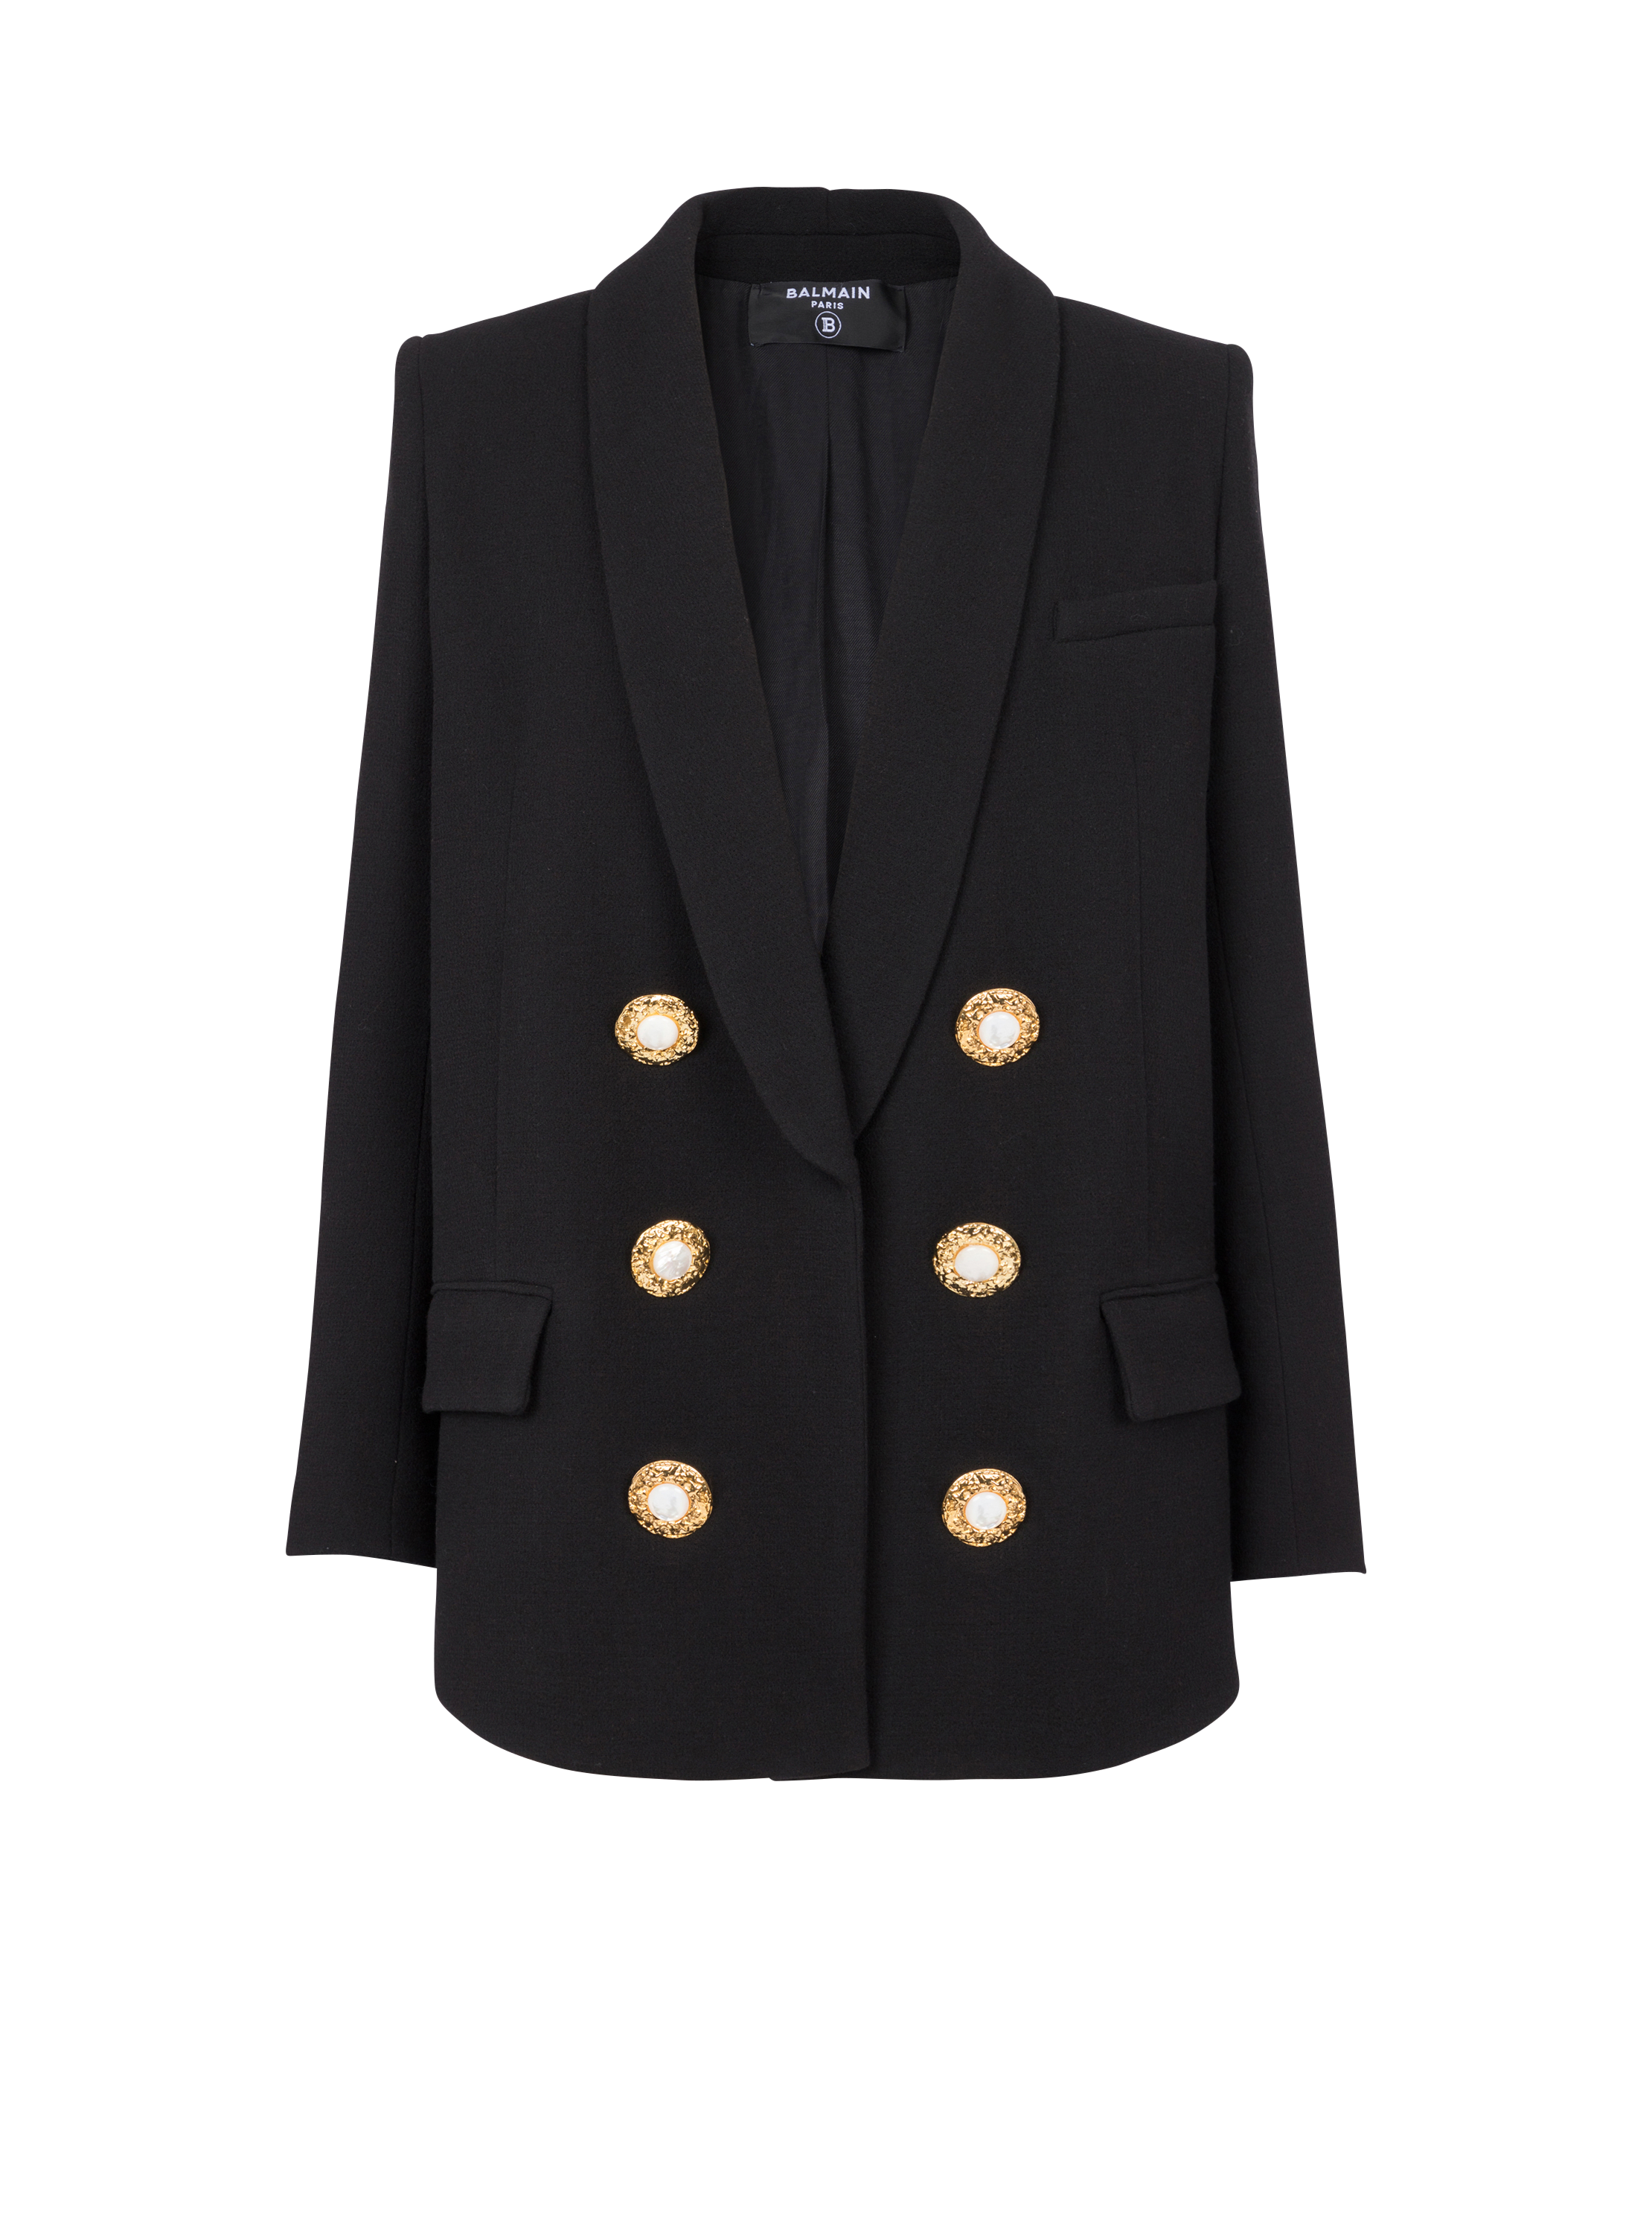 Crepe jacket with a shawl collar, black, hi-res